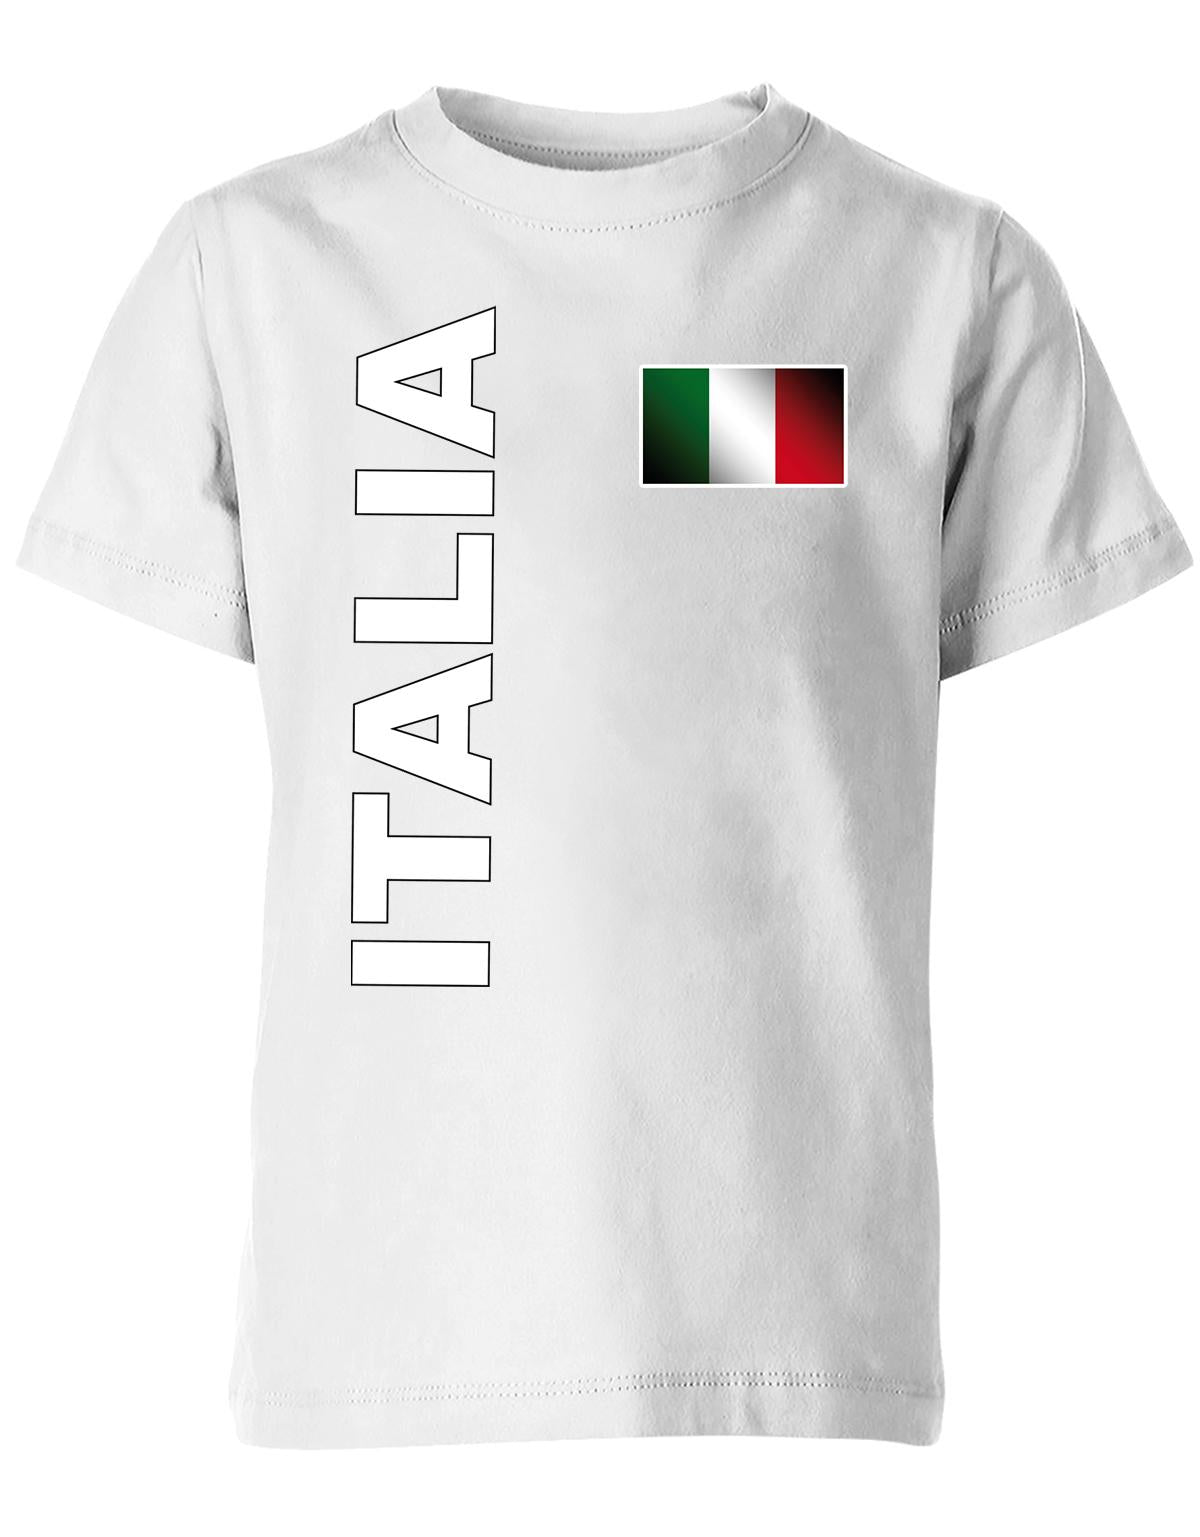 Italia-Fahne-Kinder-Weiss